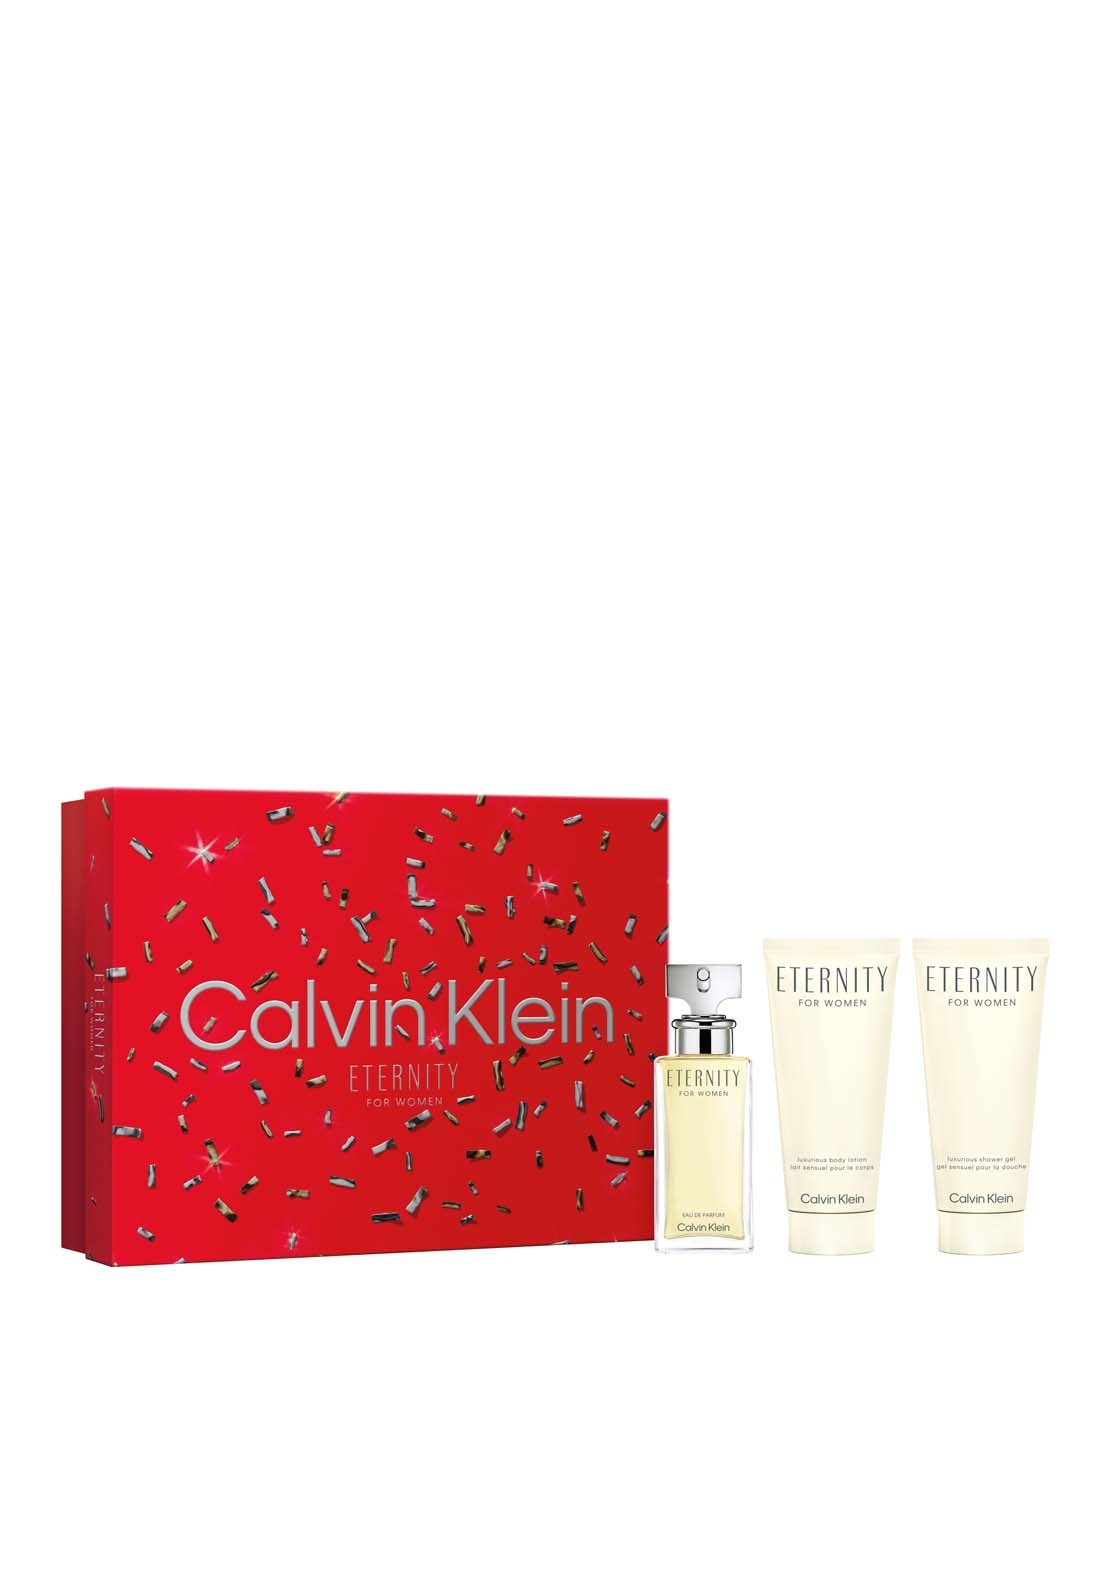 Calvin Klein Eternity For Women Eau de Parfum 50ml Giftset 1 Shaws Department Stores